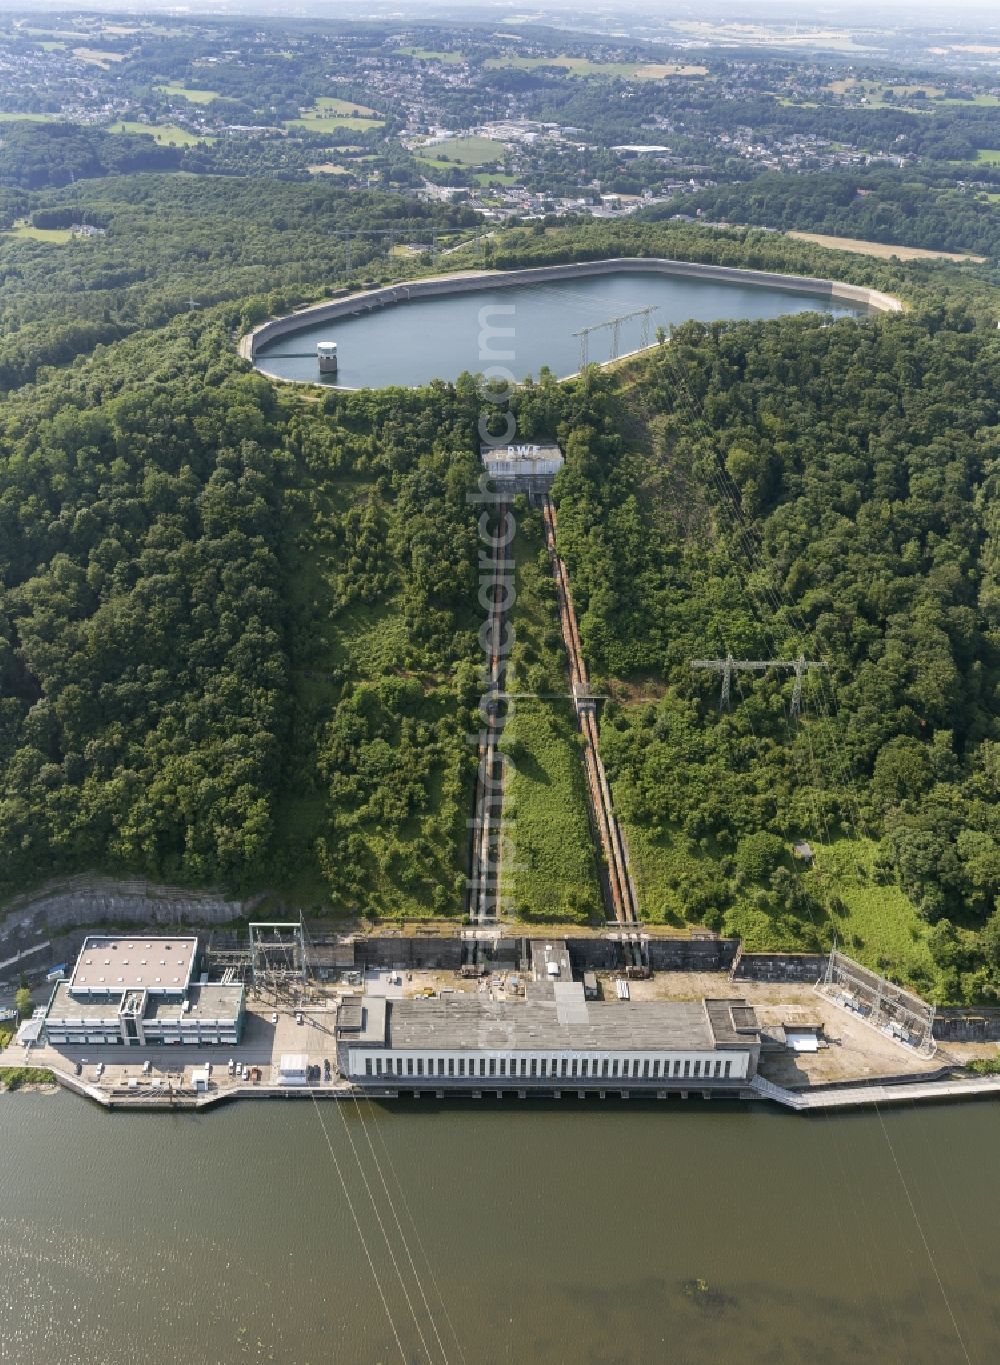 Herdecke from above - Pumped storage power plant / hydro power plant with energy storage on Hengsteysee in Herdecke in North Rhine-Westphalia